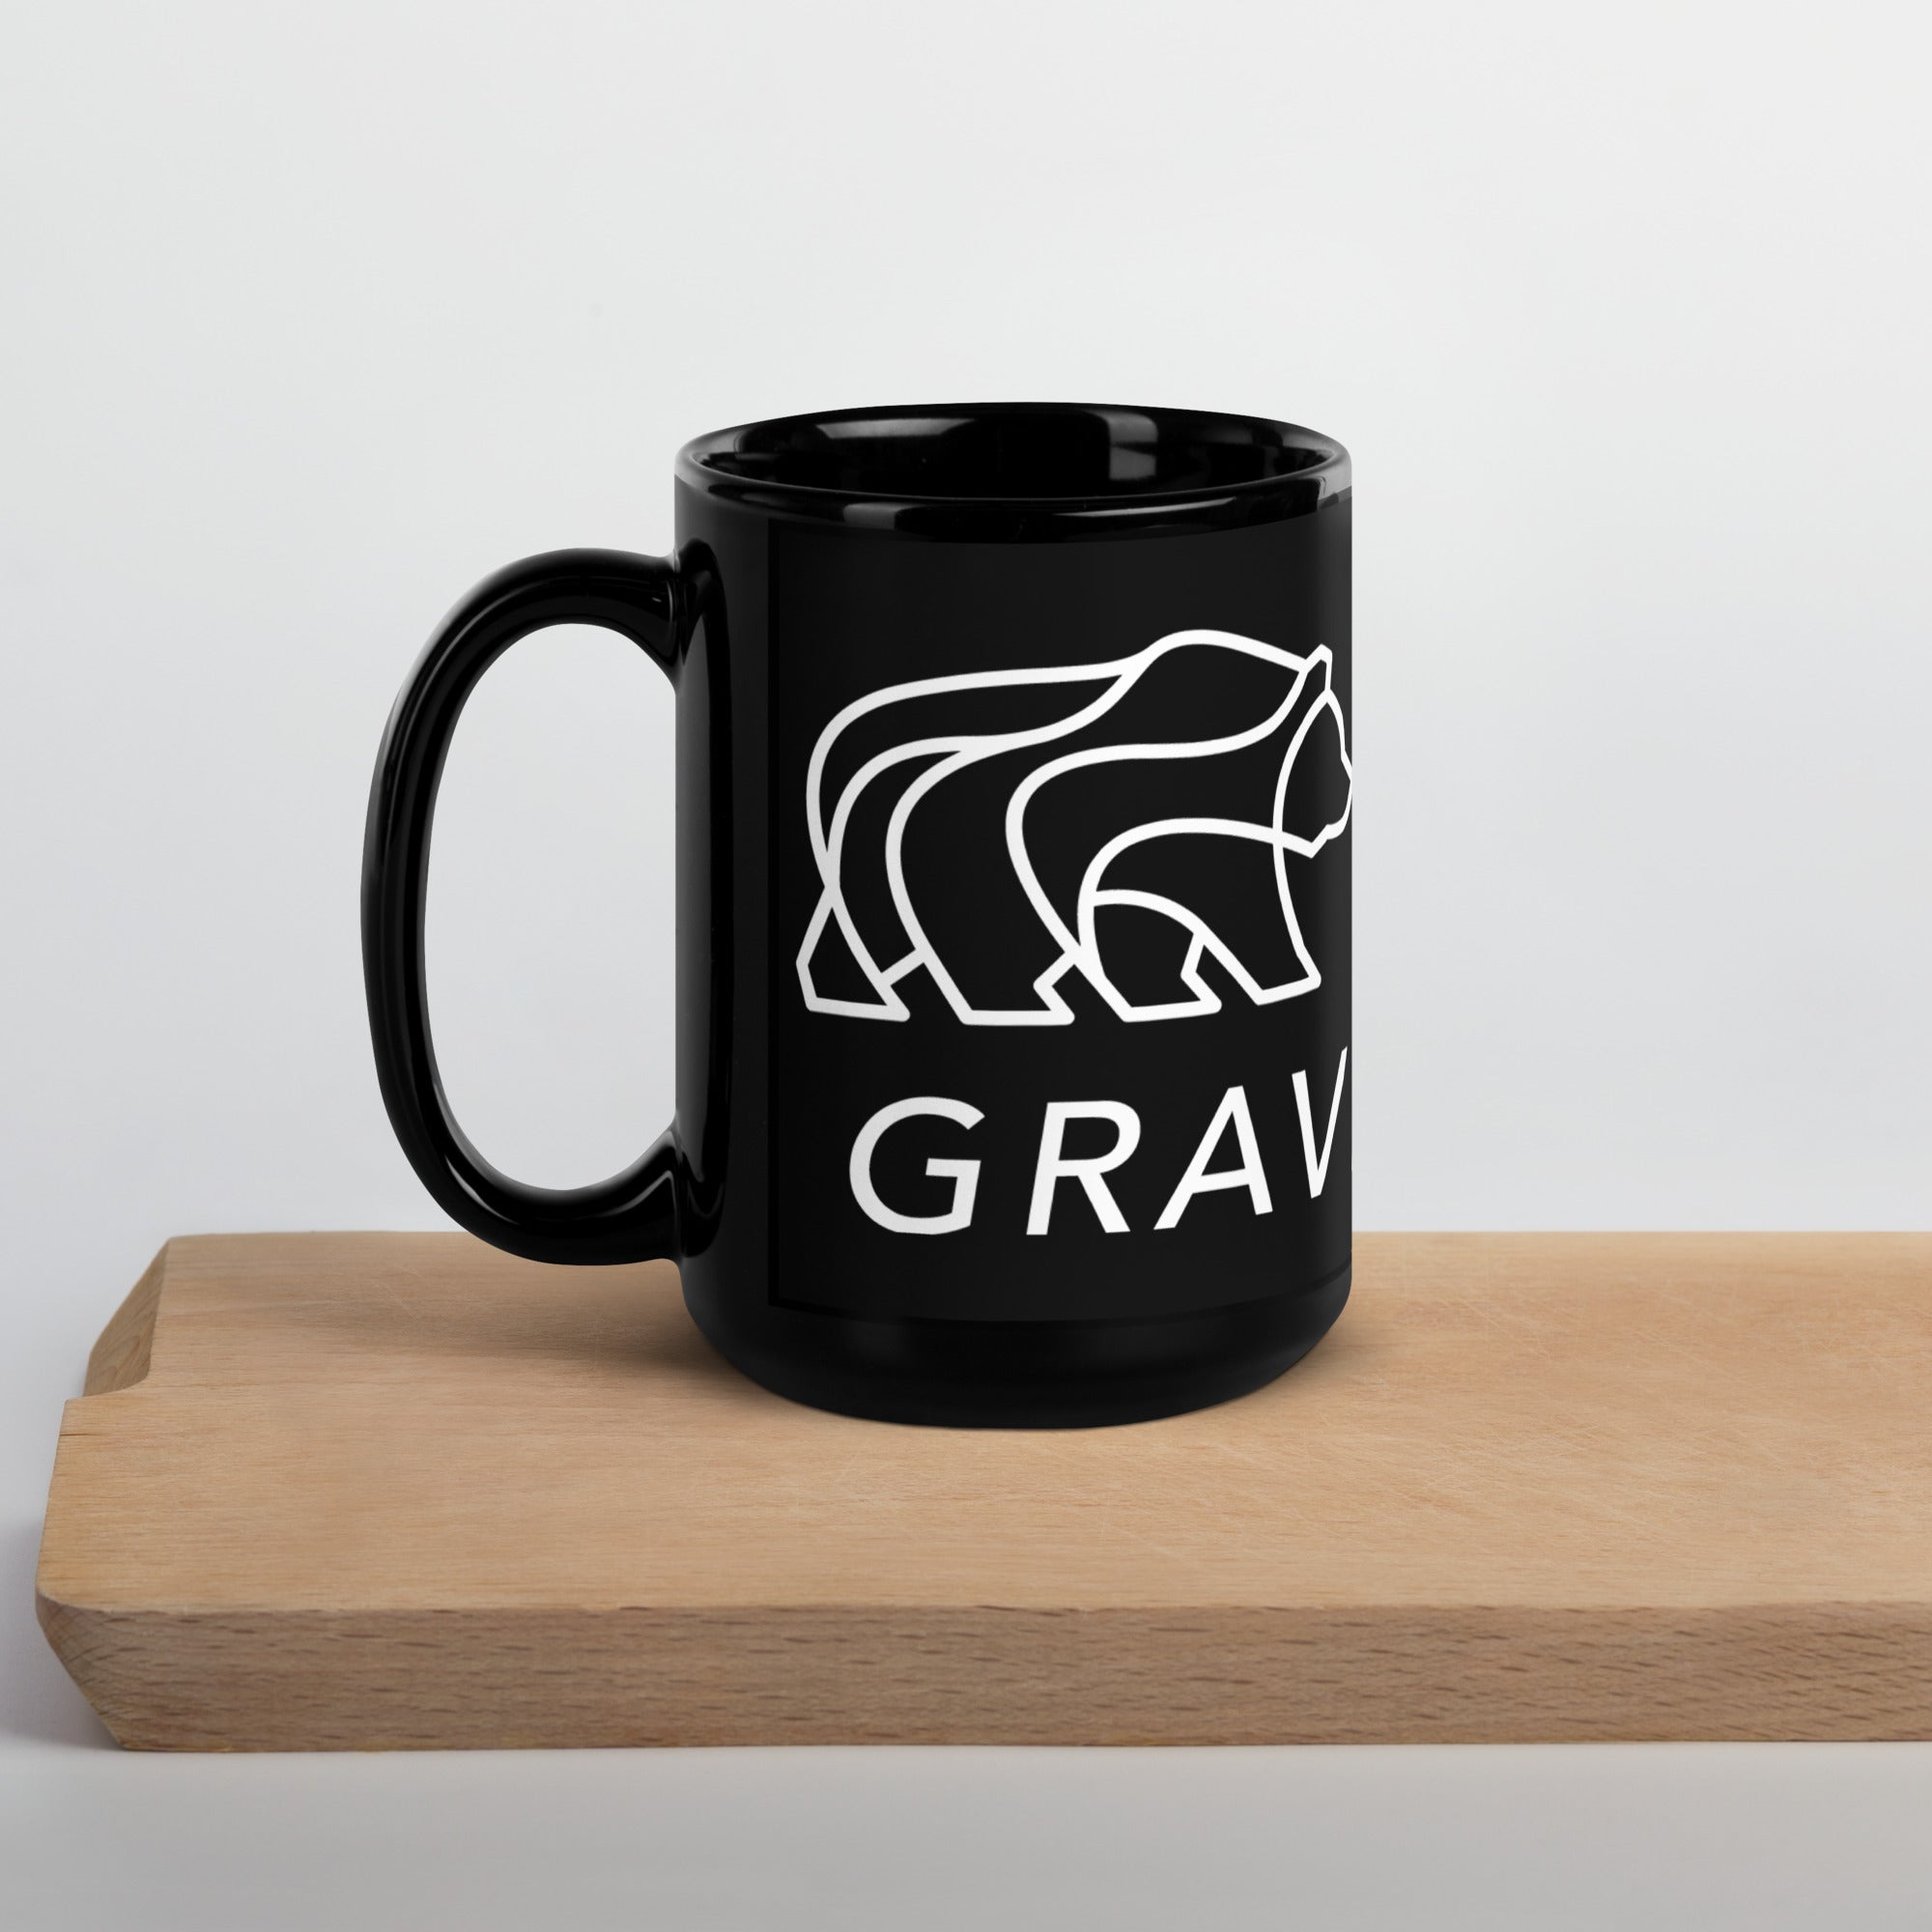 Eliel Gravel Team Black Glossy Mug